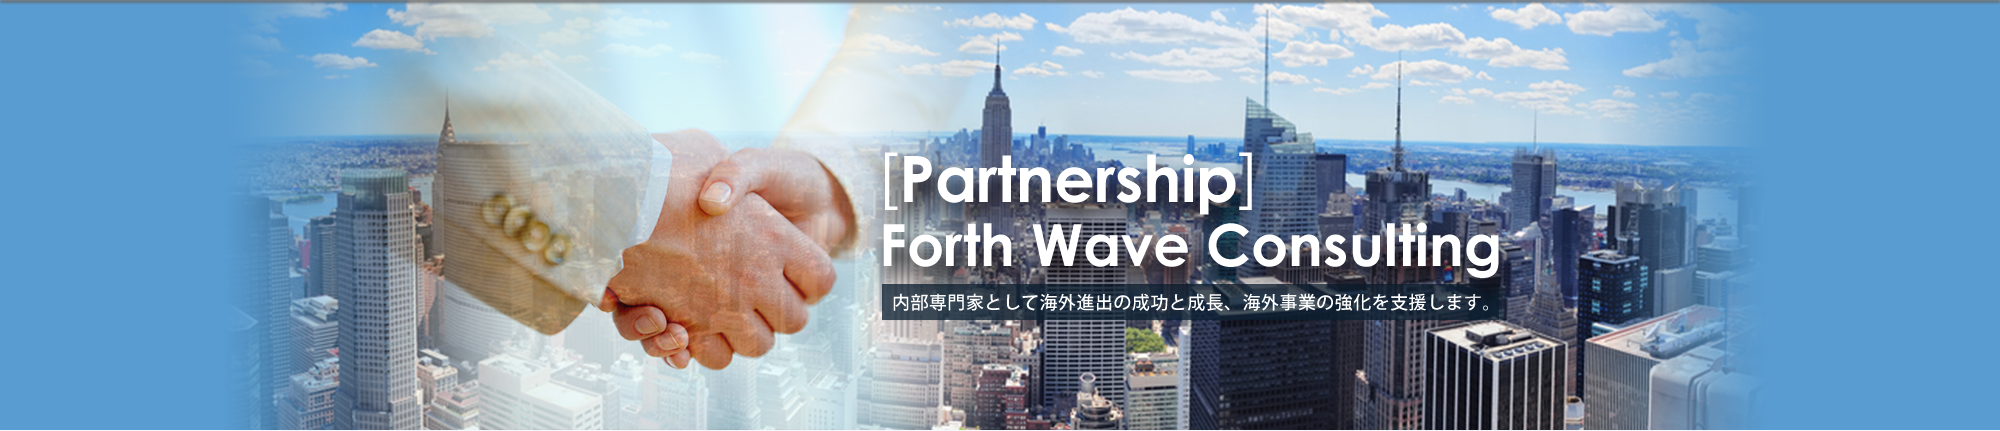 [Partnership] Forth Wave Consulting 内部専門家として海外進出の成功と成長、海外事業の強化を支援します。